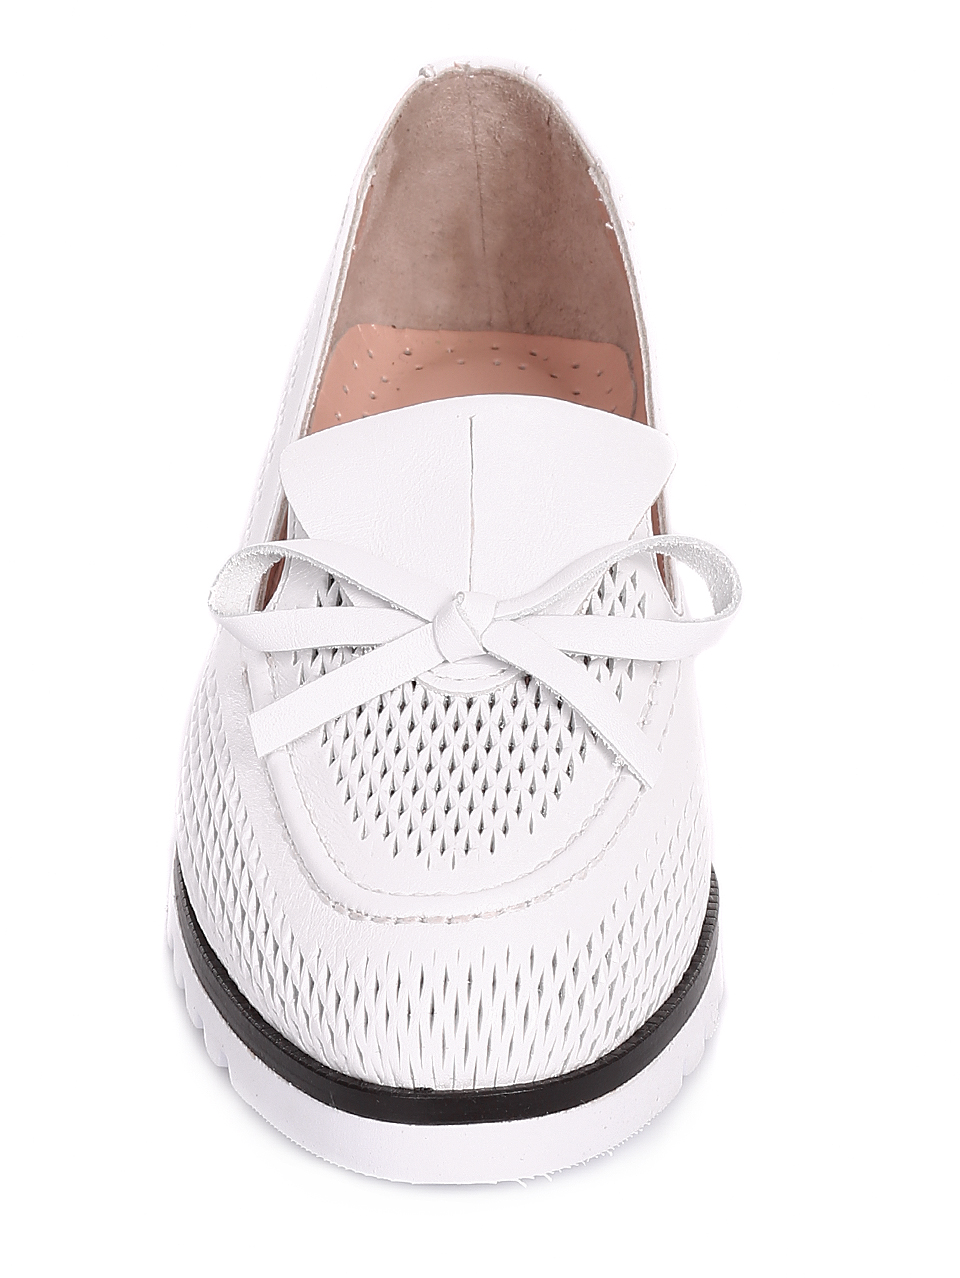 Ежедневни дамски обувки от естествена кожа 3AT-20481 white